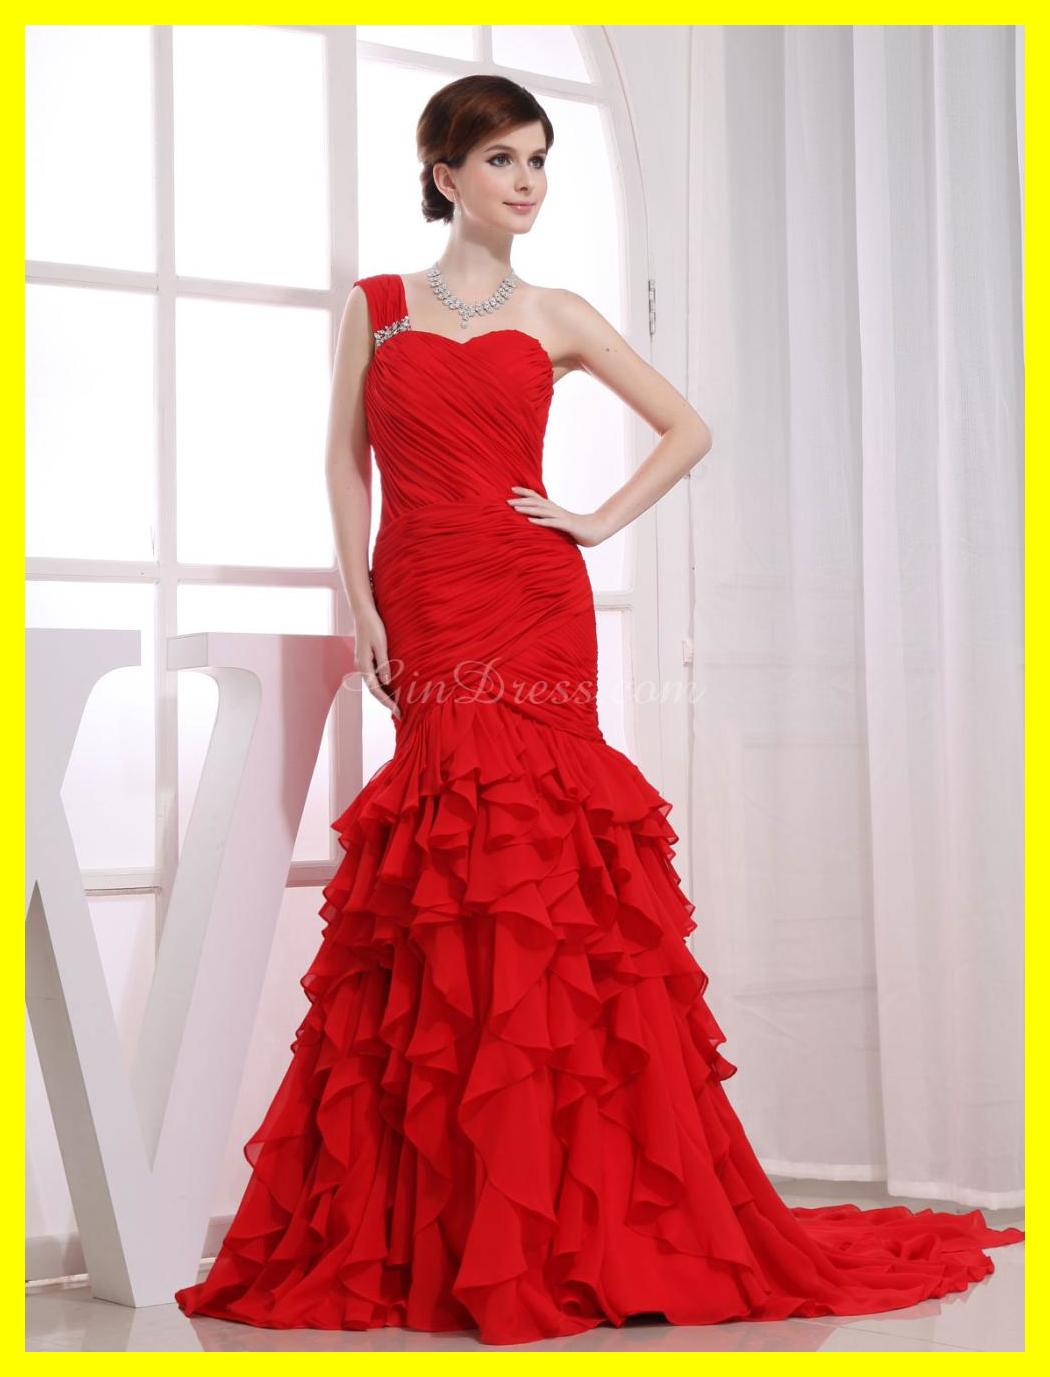 Prom Dress Hire Uk Dresses Austin Tx Designers Evening Childrens ...